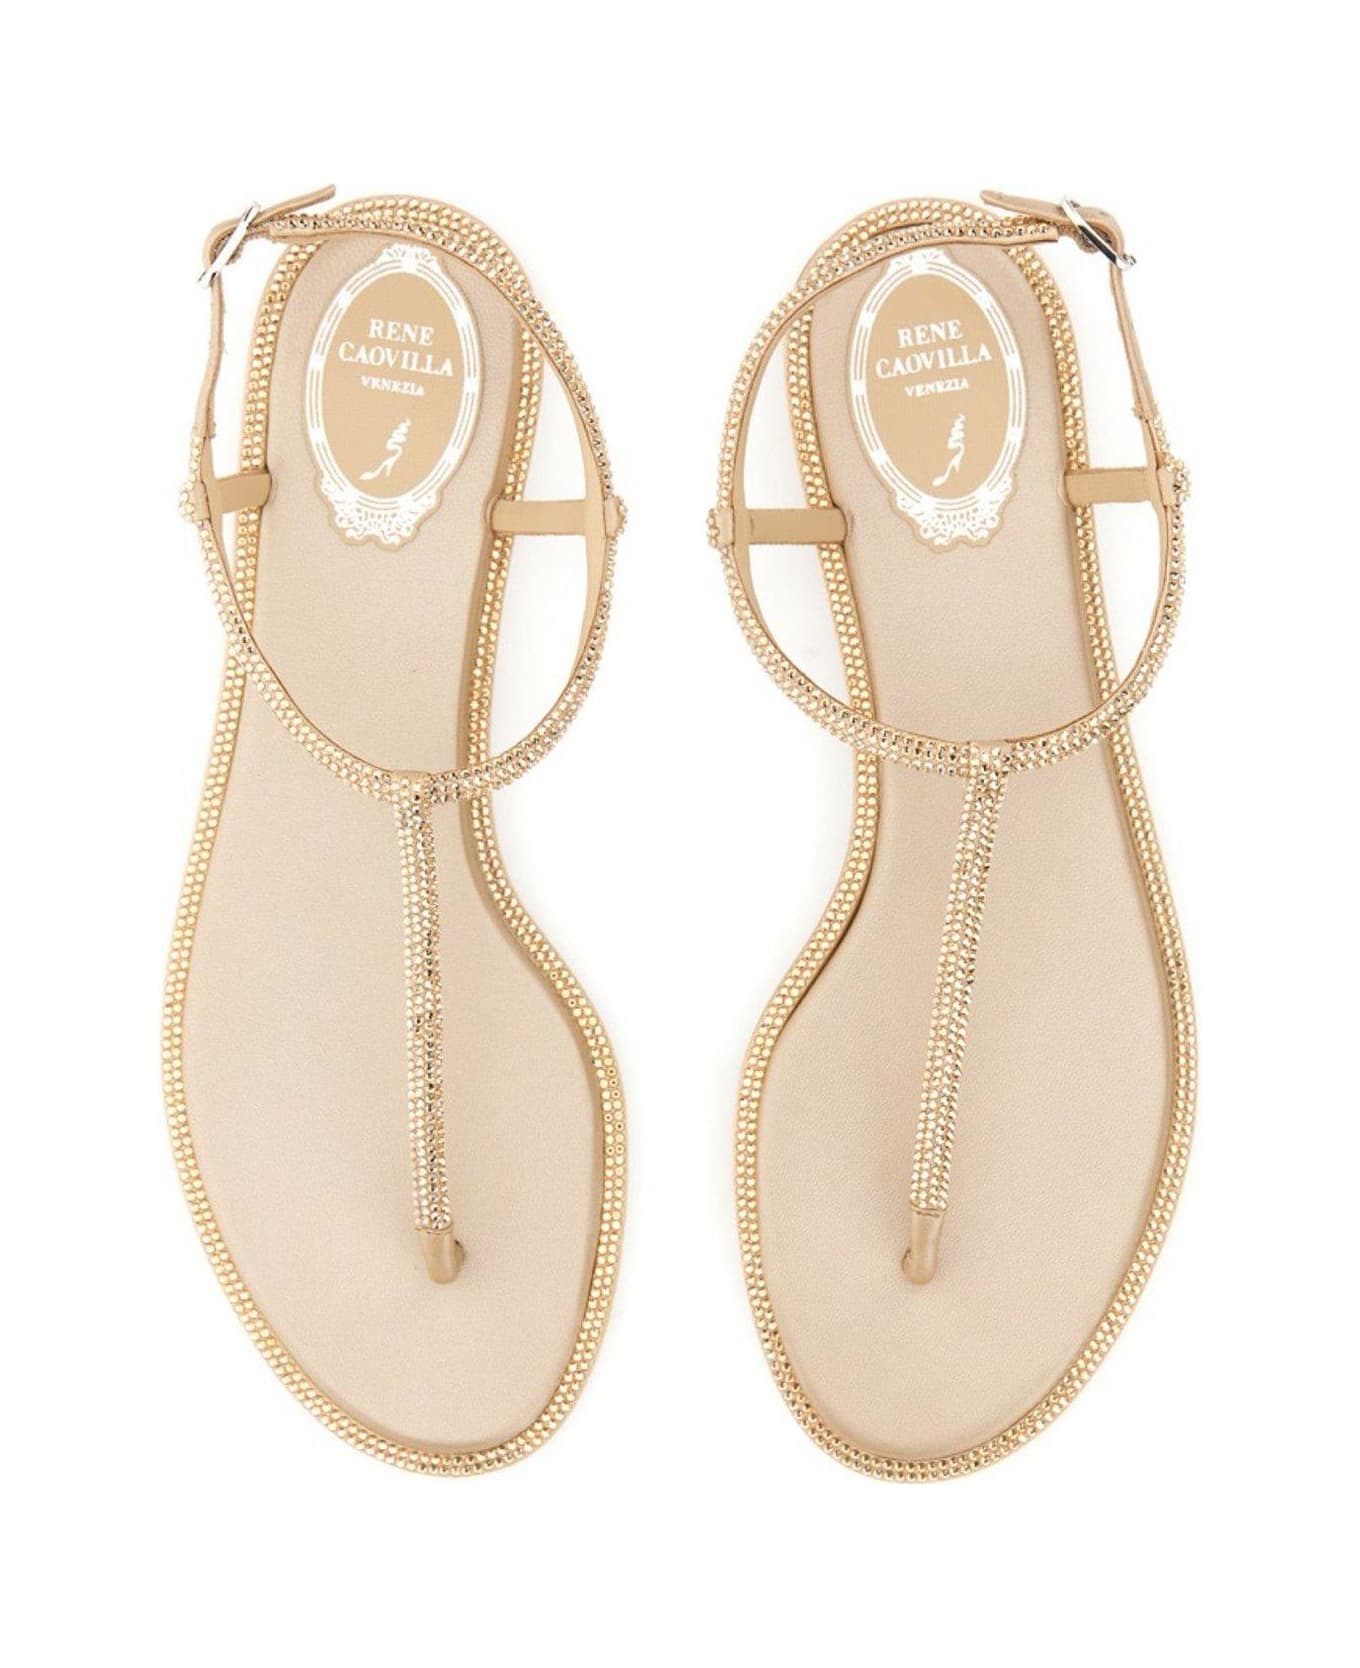 René Caovilla Diana Embellished Thong Sandals - Beige